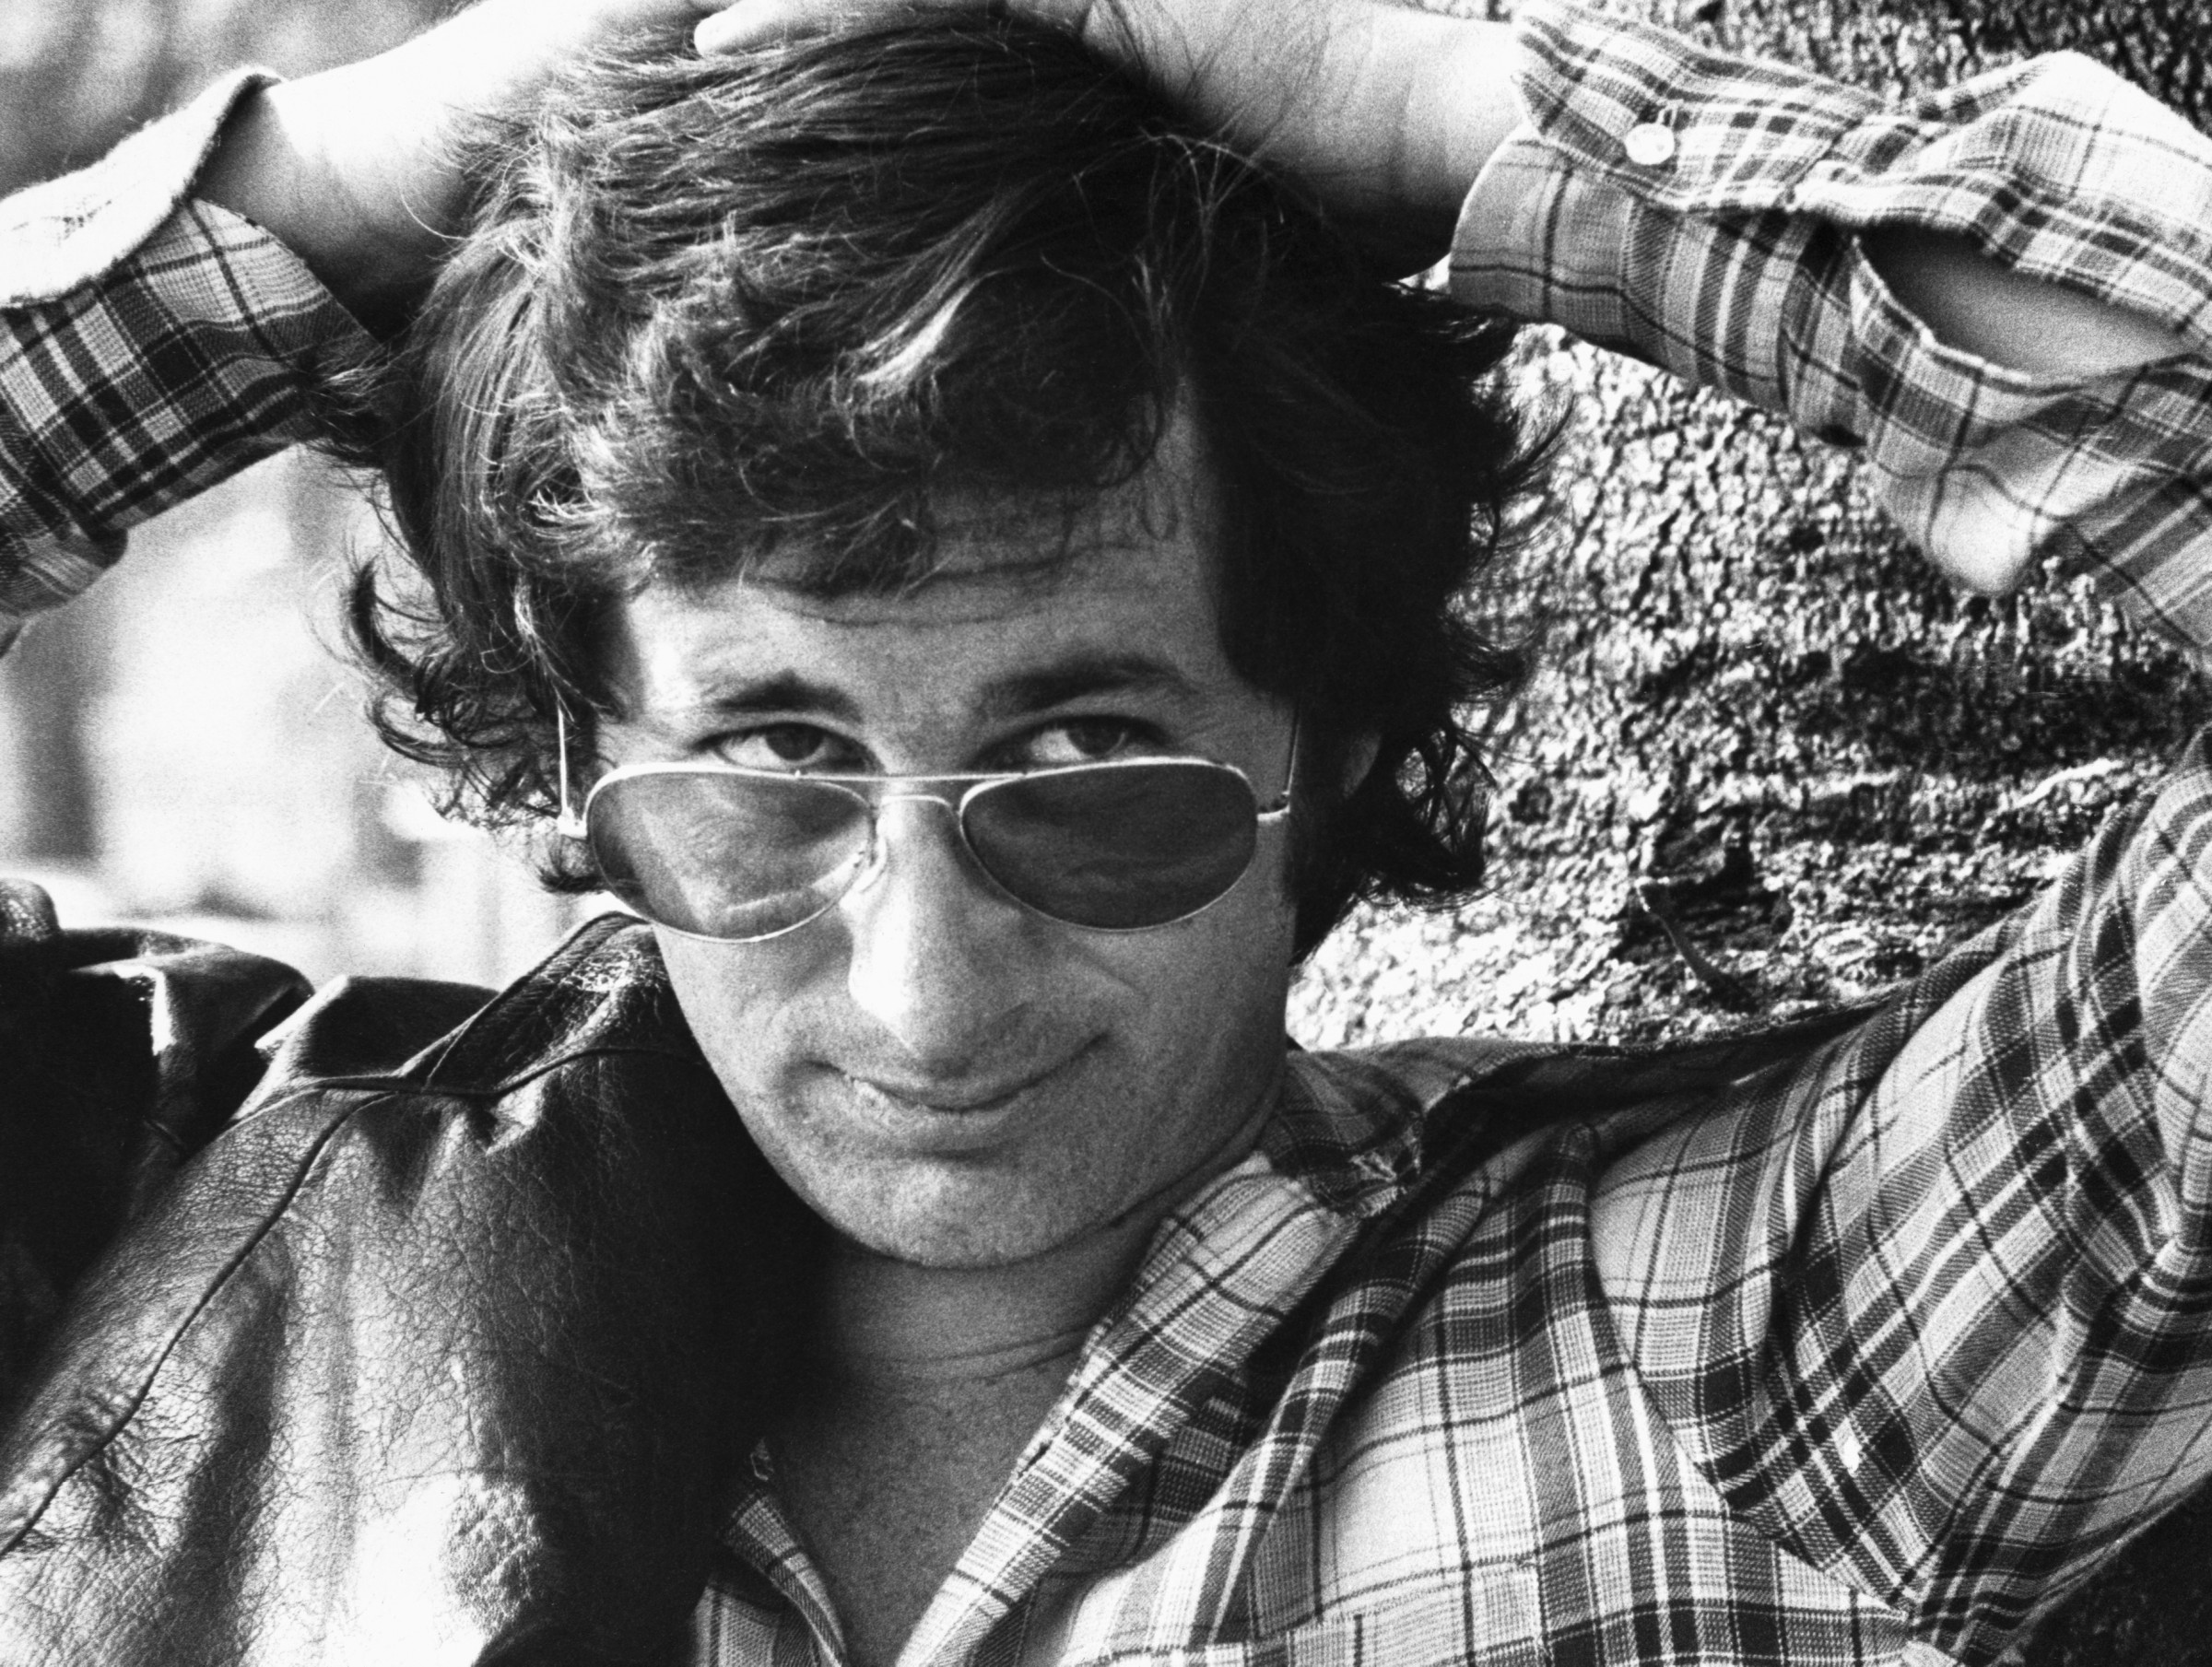 1973, London, England, UK --- Film Director Stephen Spielberg, 1973 --- Image by © Hulton-Deutsch Collection/CORBIS